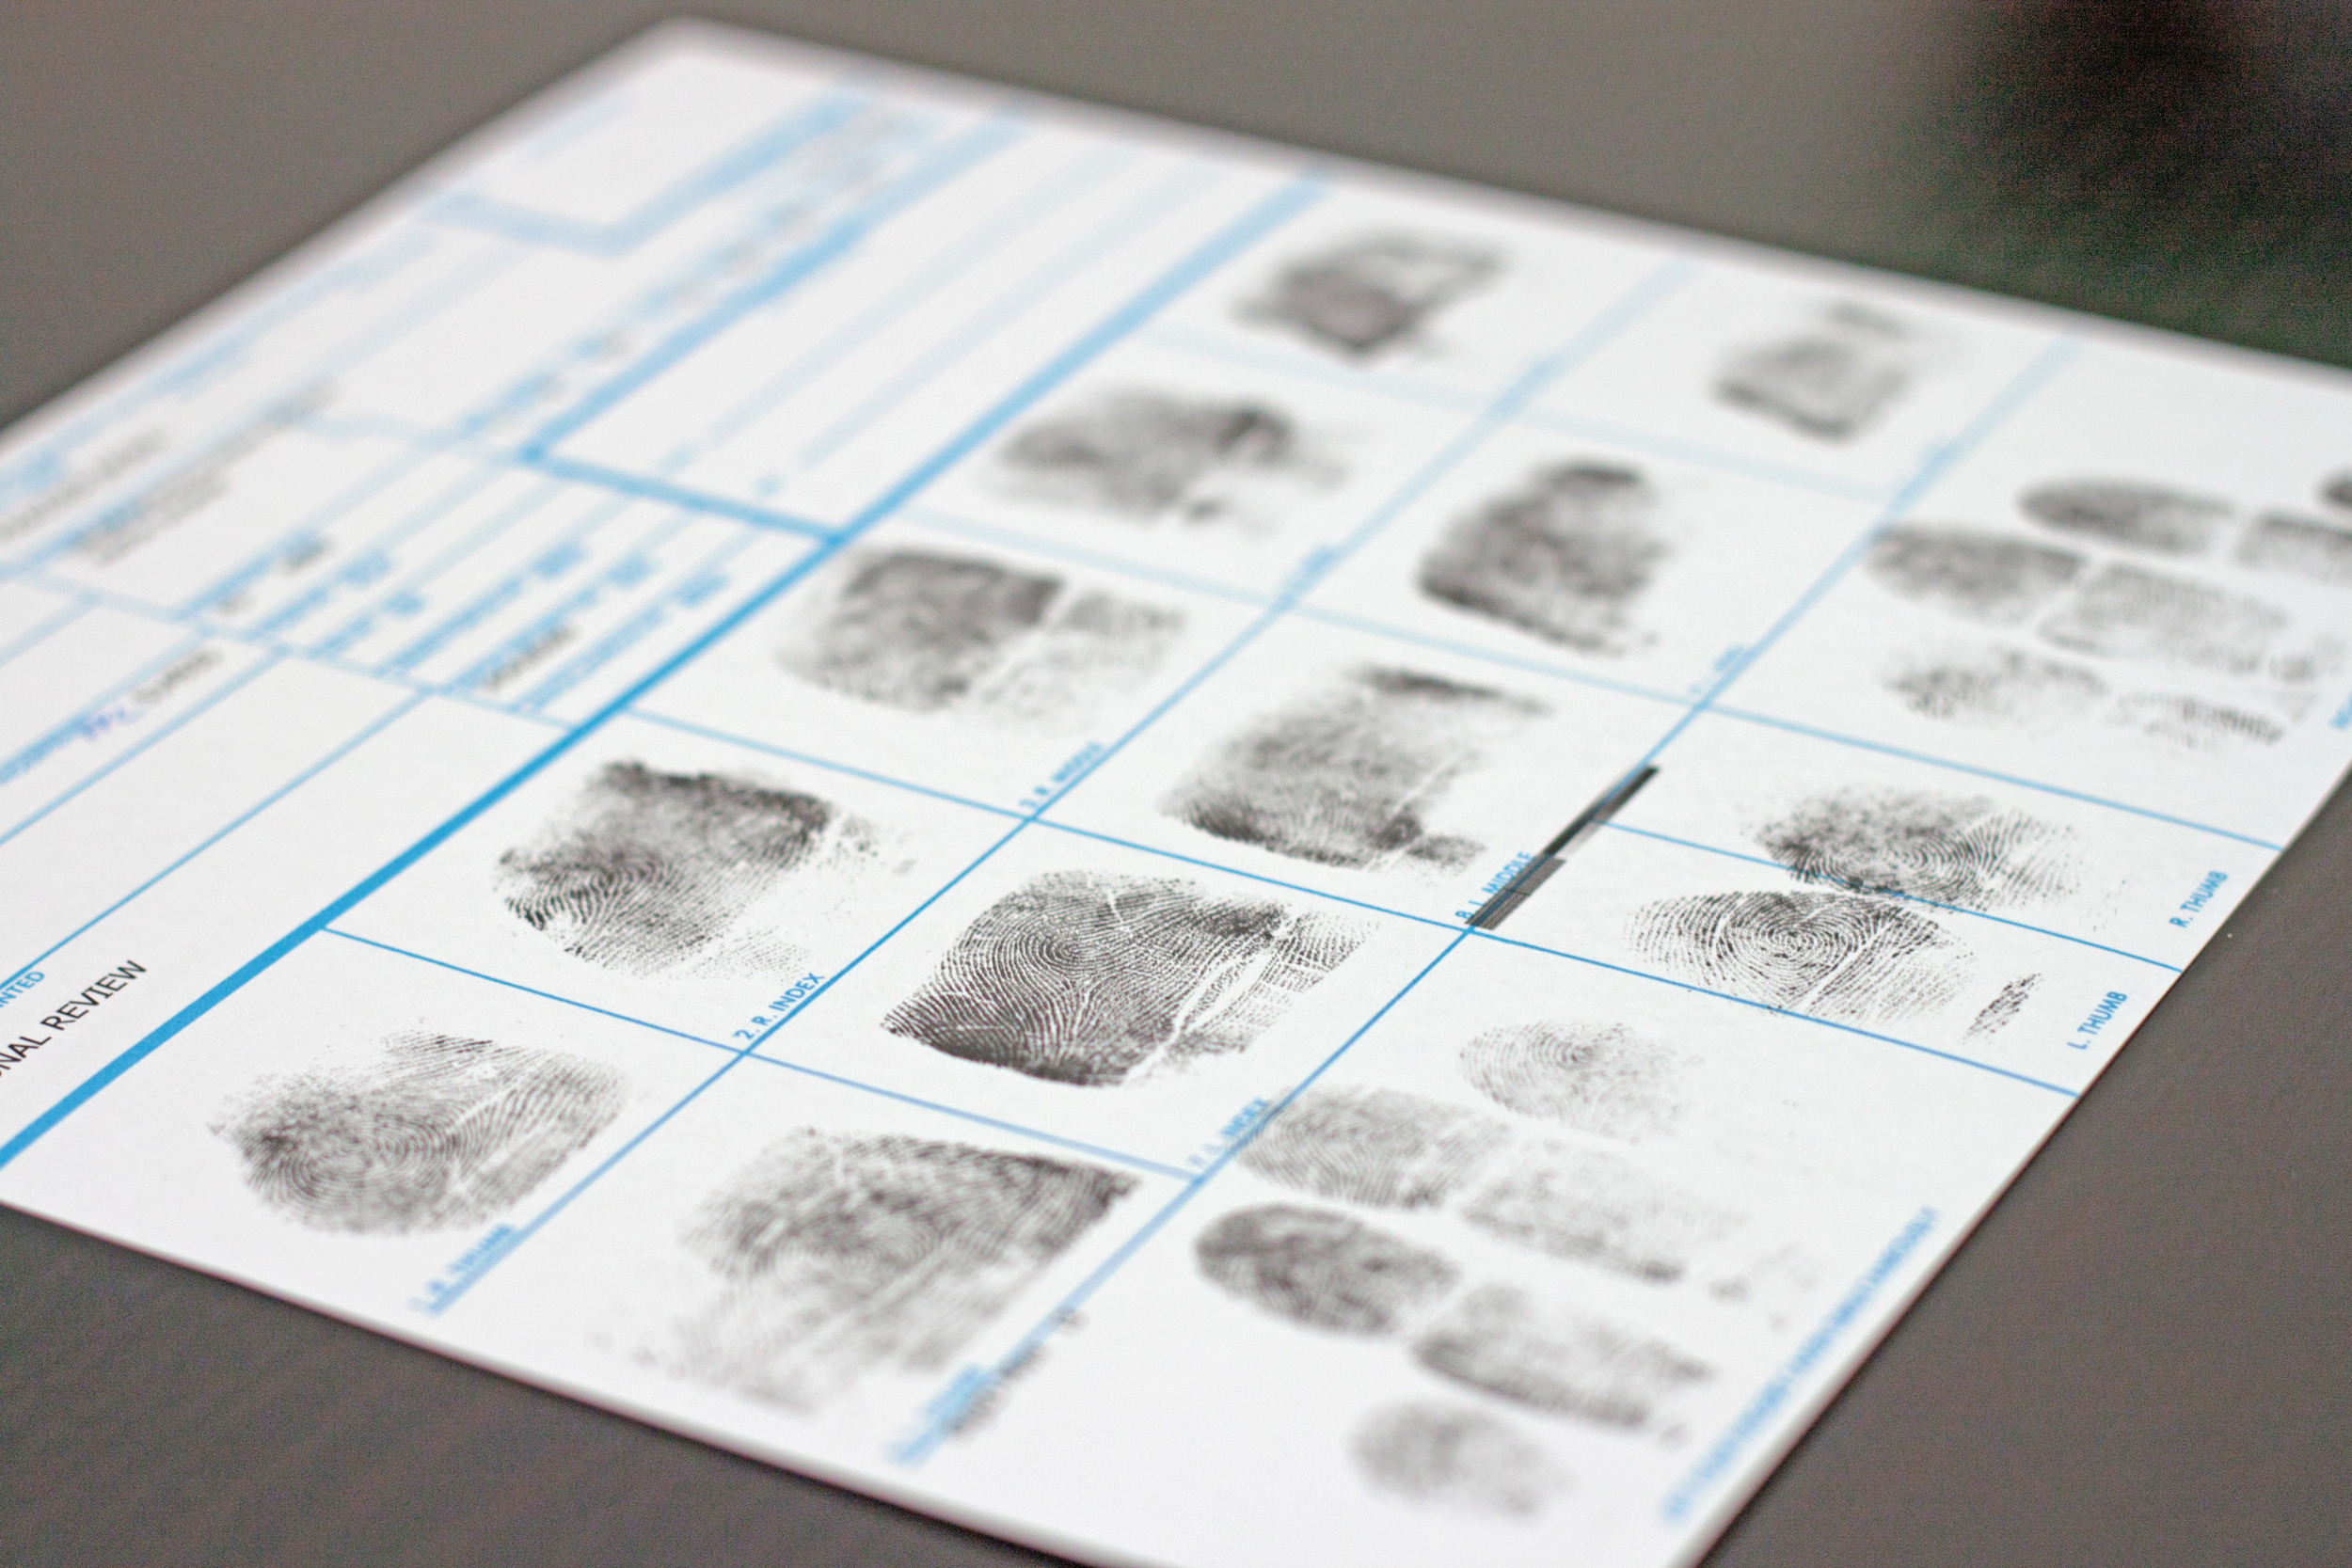 inked-fingerprints-fnl-fingerprints-notary-public-passport-photos